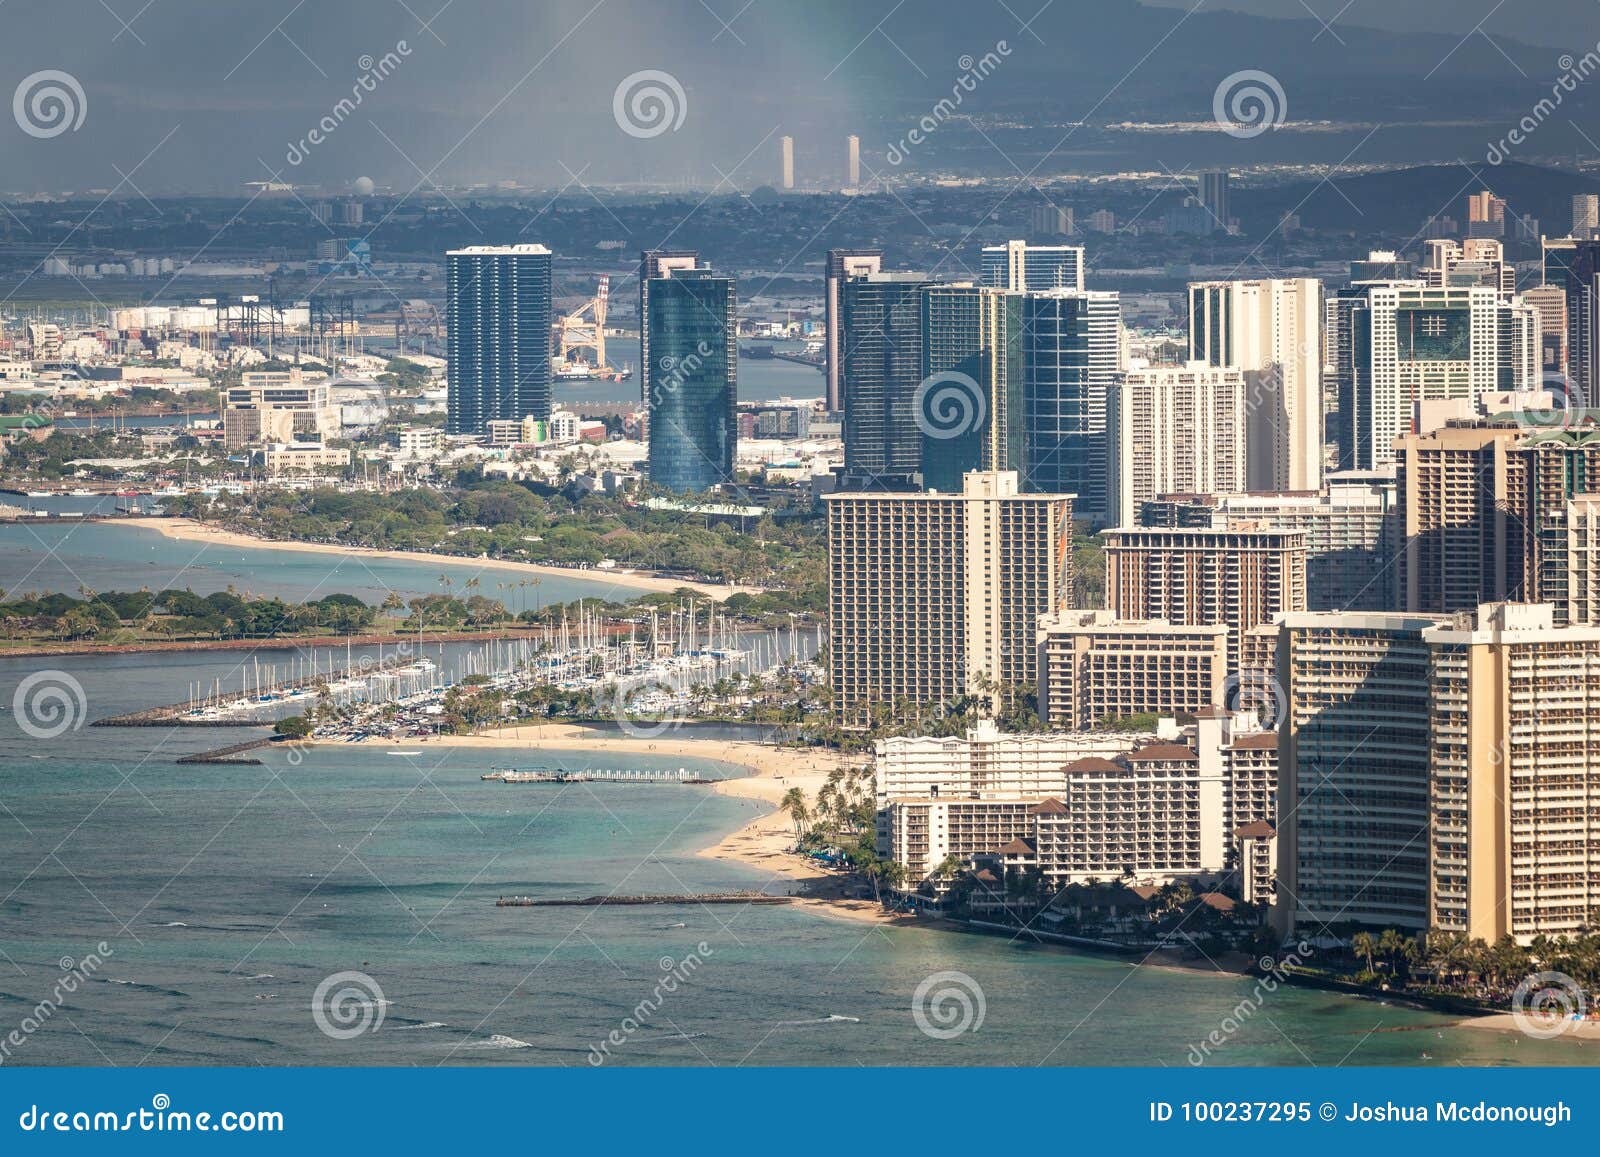 Waikiki Marina and Resorts stock image Image of buildings 